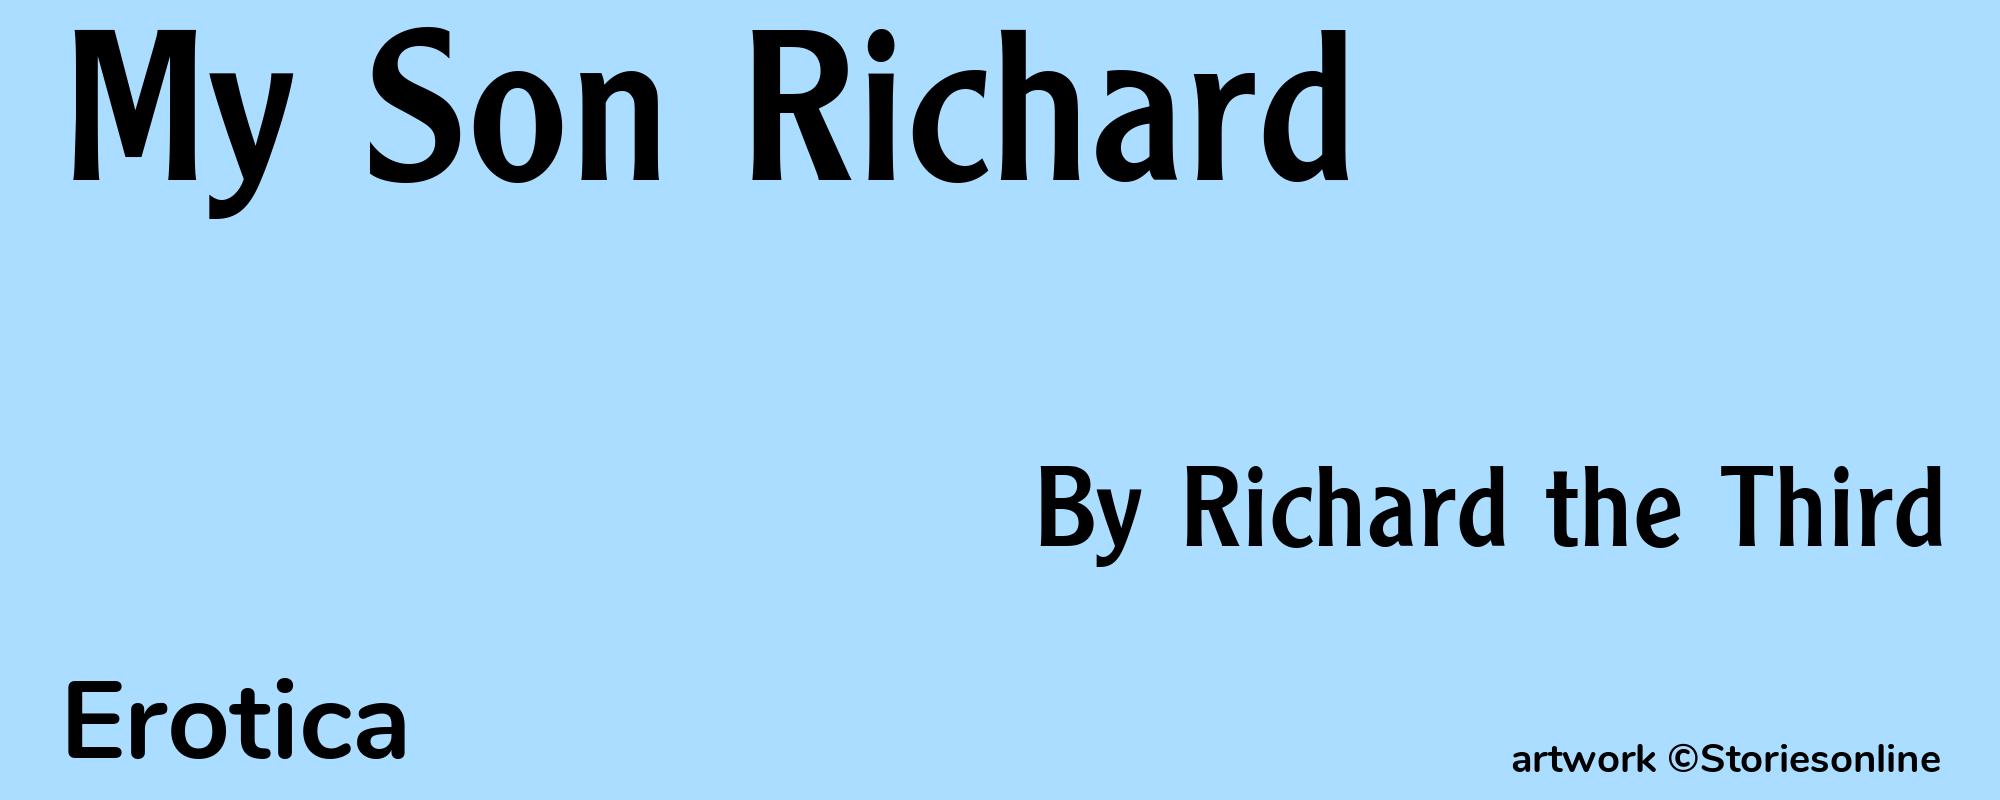 My Son Richard - Cover